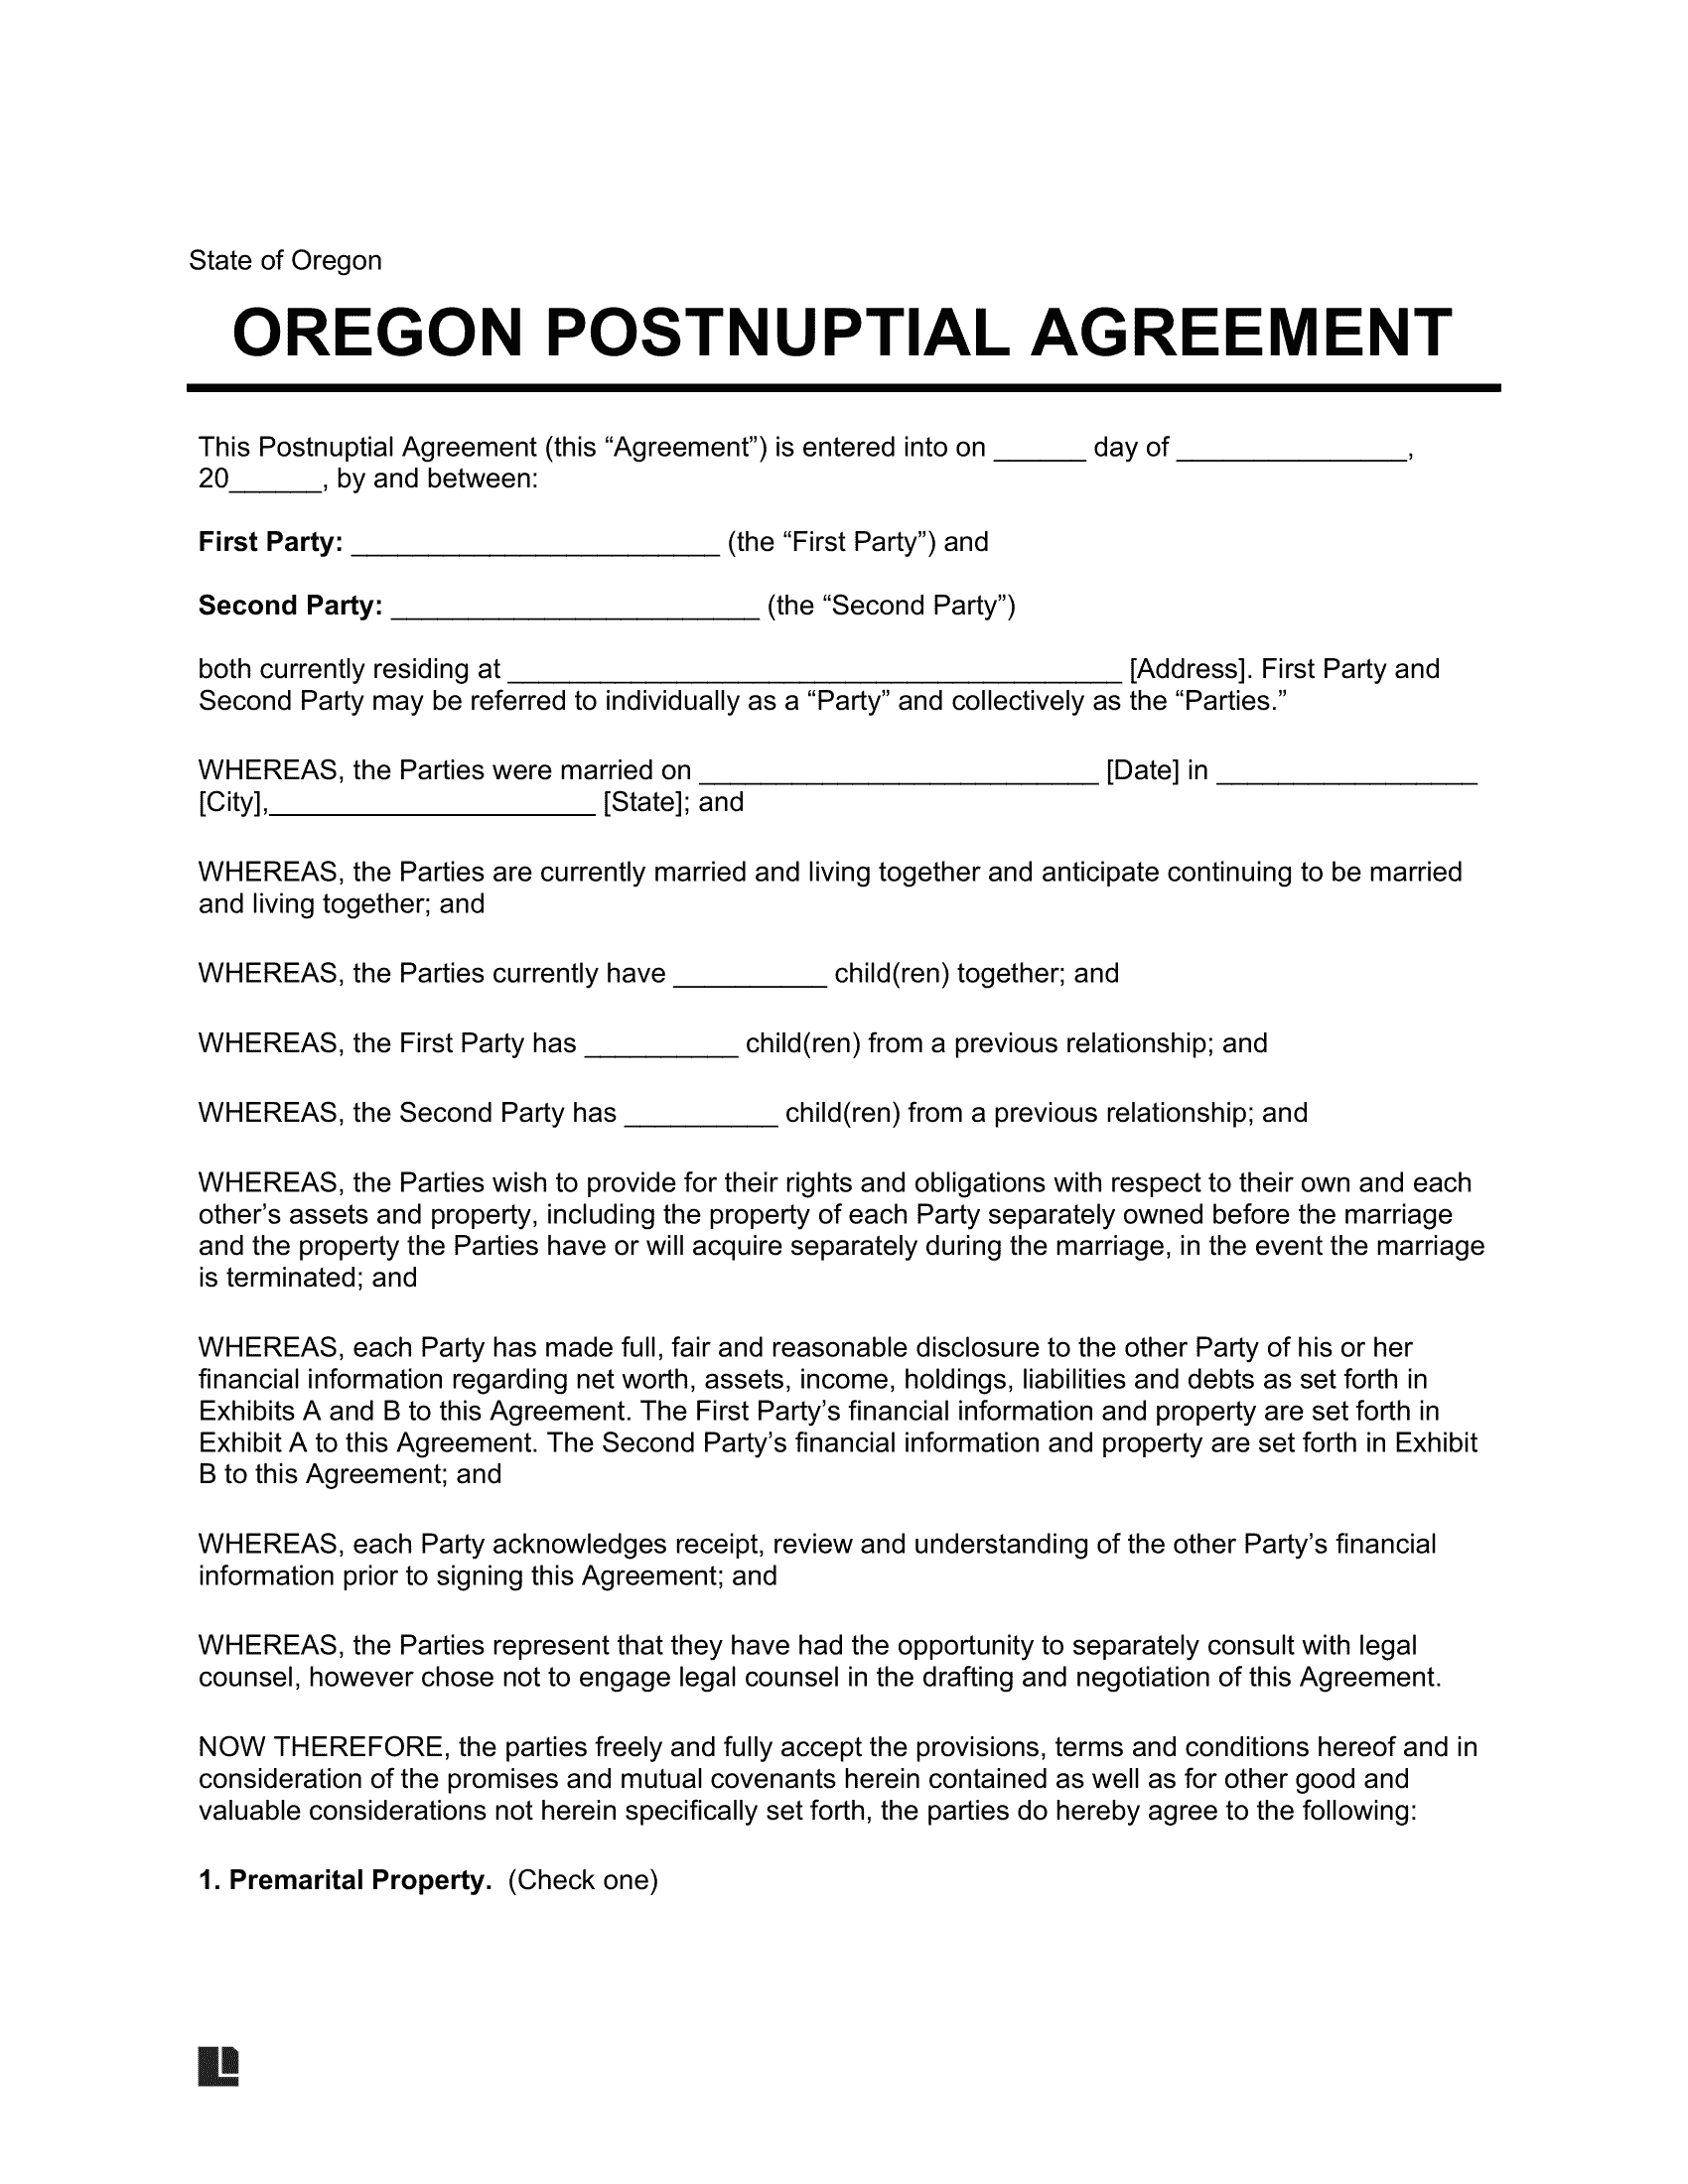 Oregon Postnuptial Agreement Template